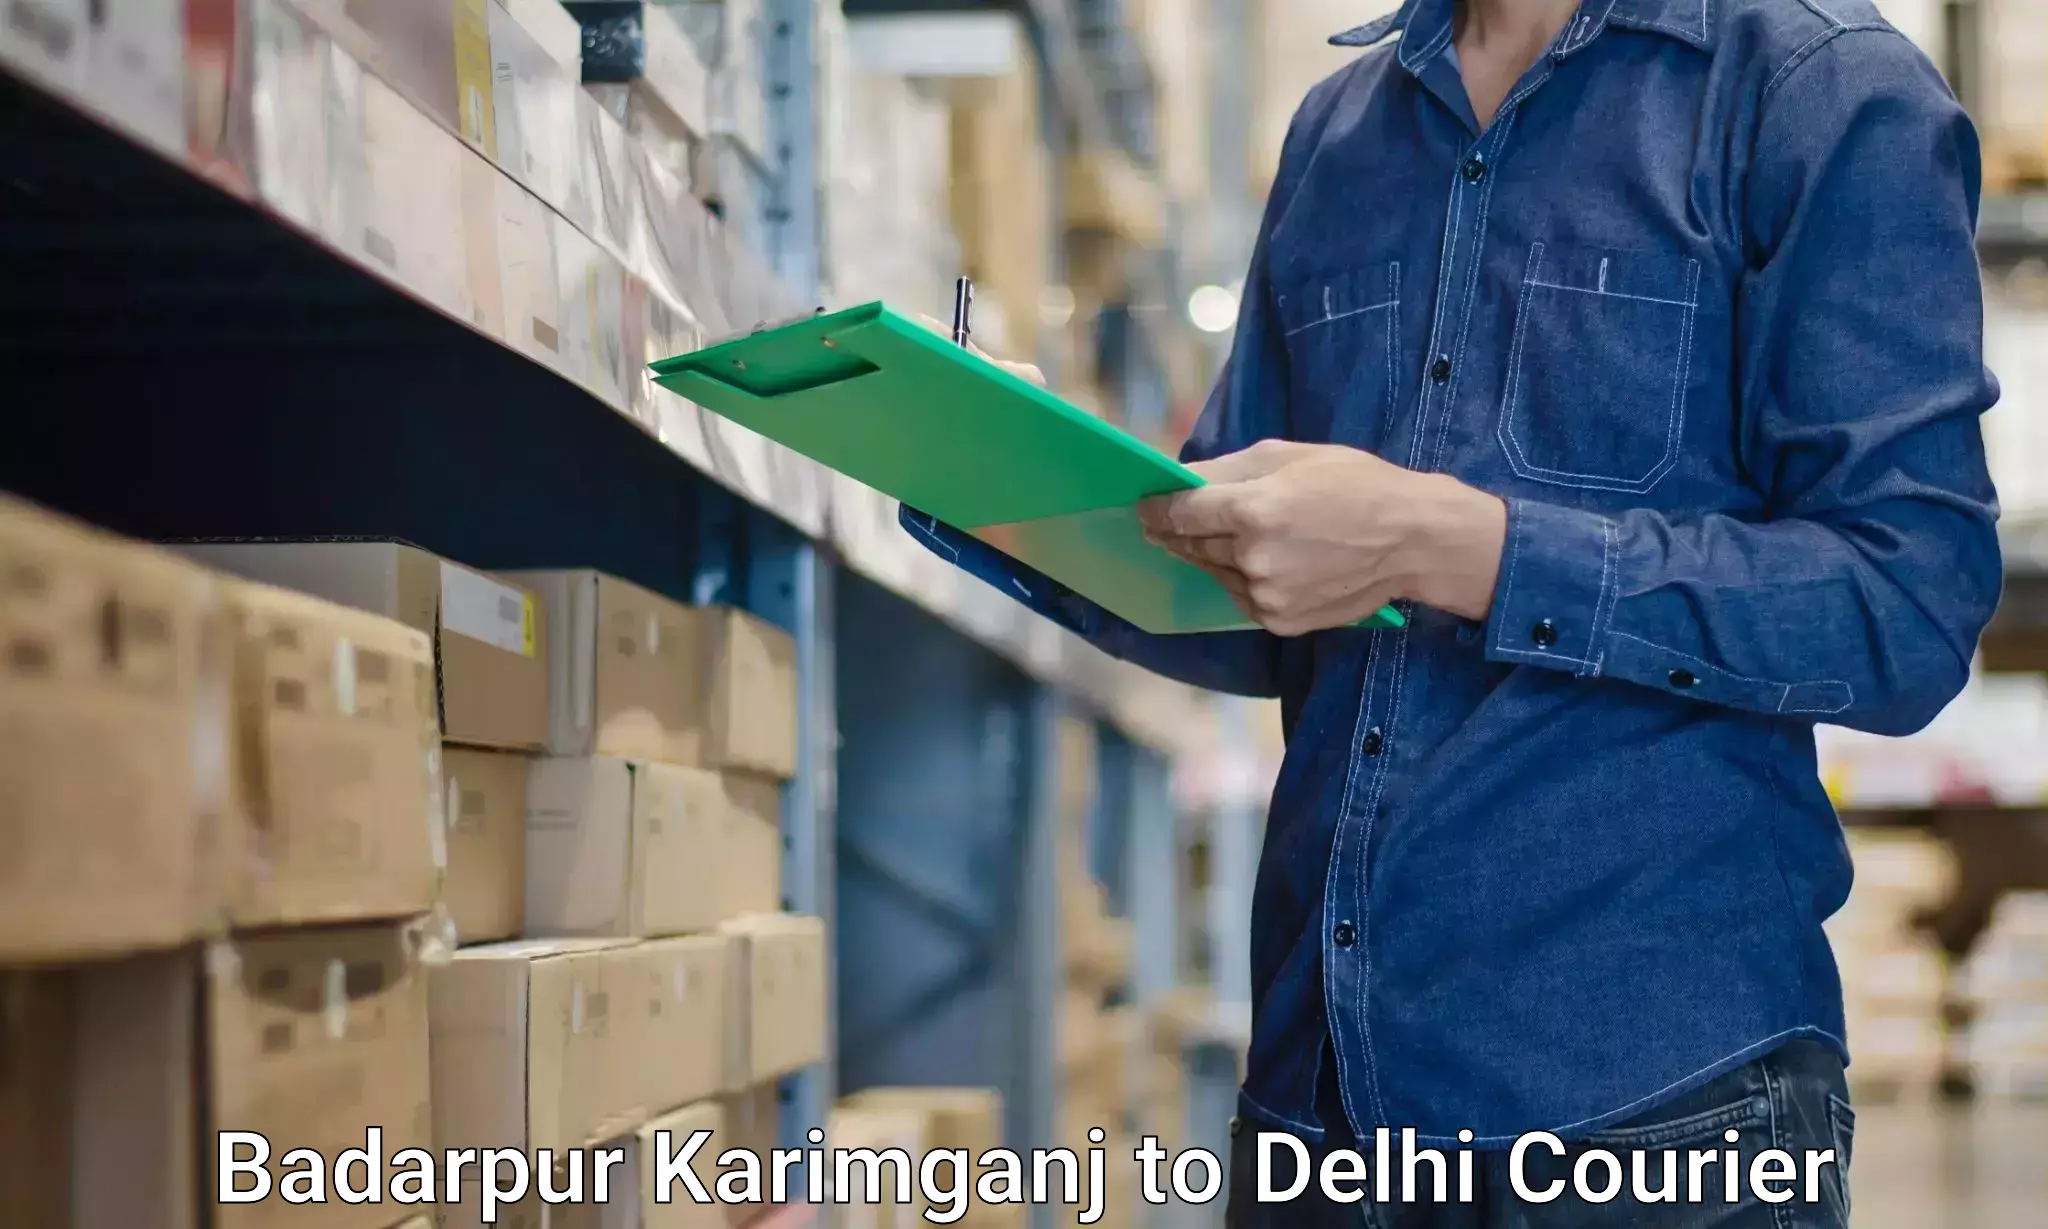 Furniture delivery service Badarpur Karimganj to University of Delhi